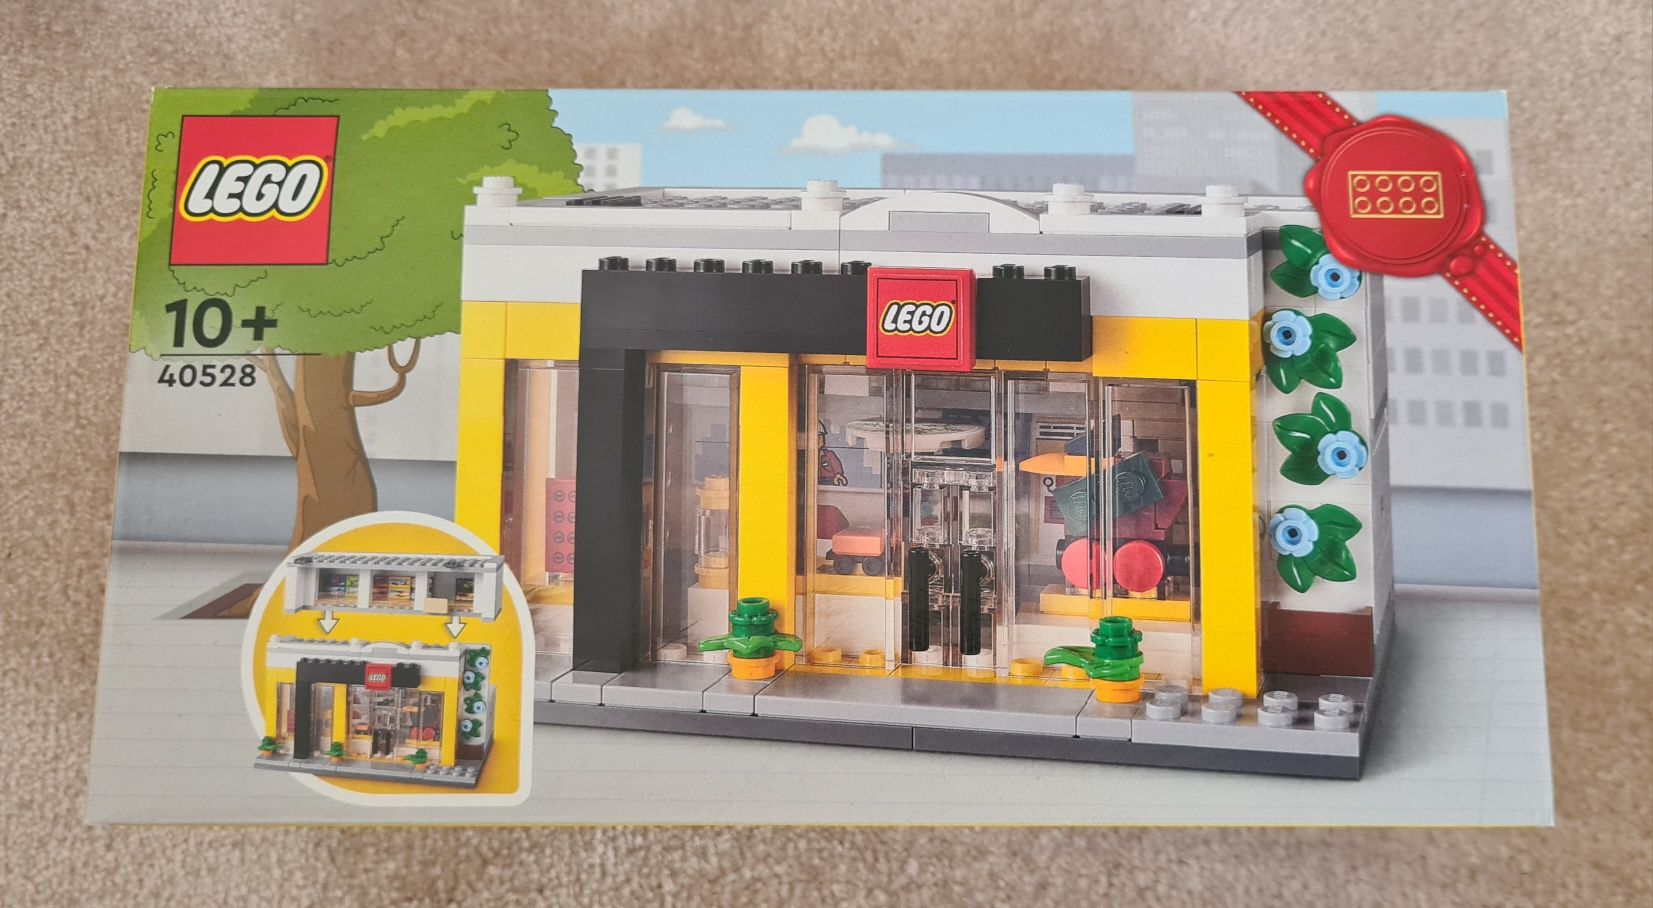 Lego GWP Series Limitadas e outros modelos. Todos Selados.